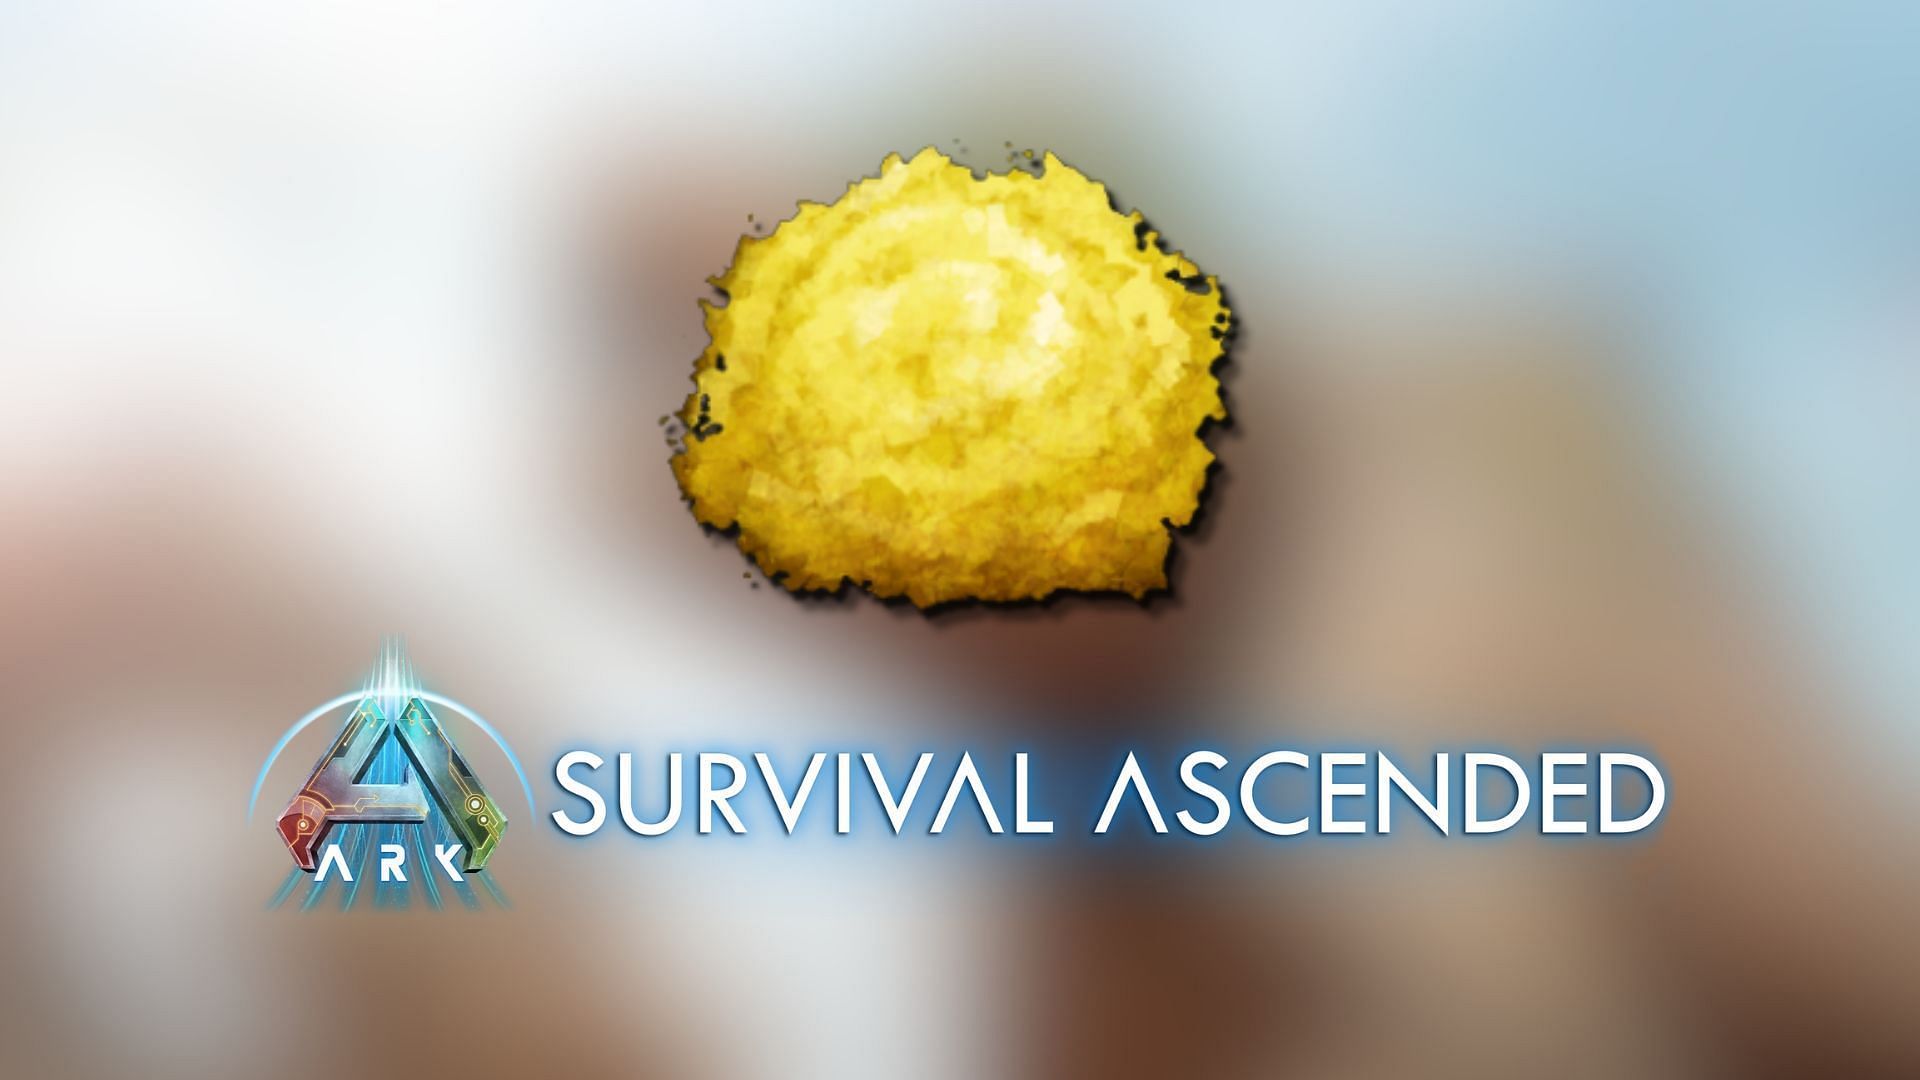 Sulfur in Ark Survival Ascended